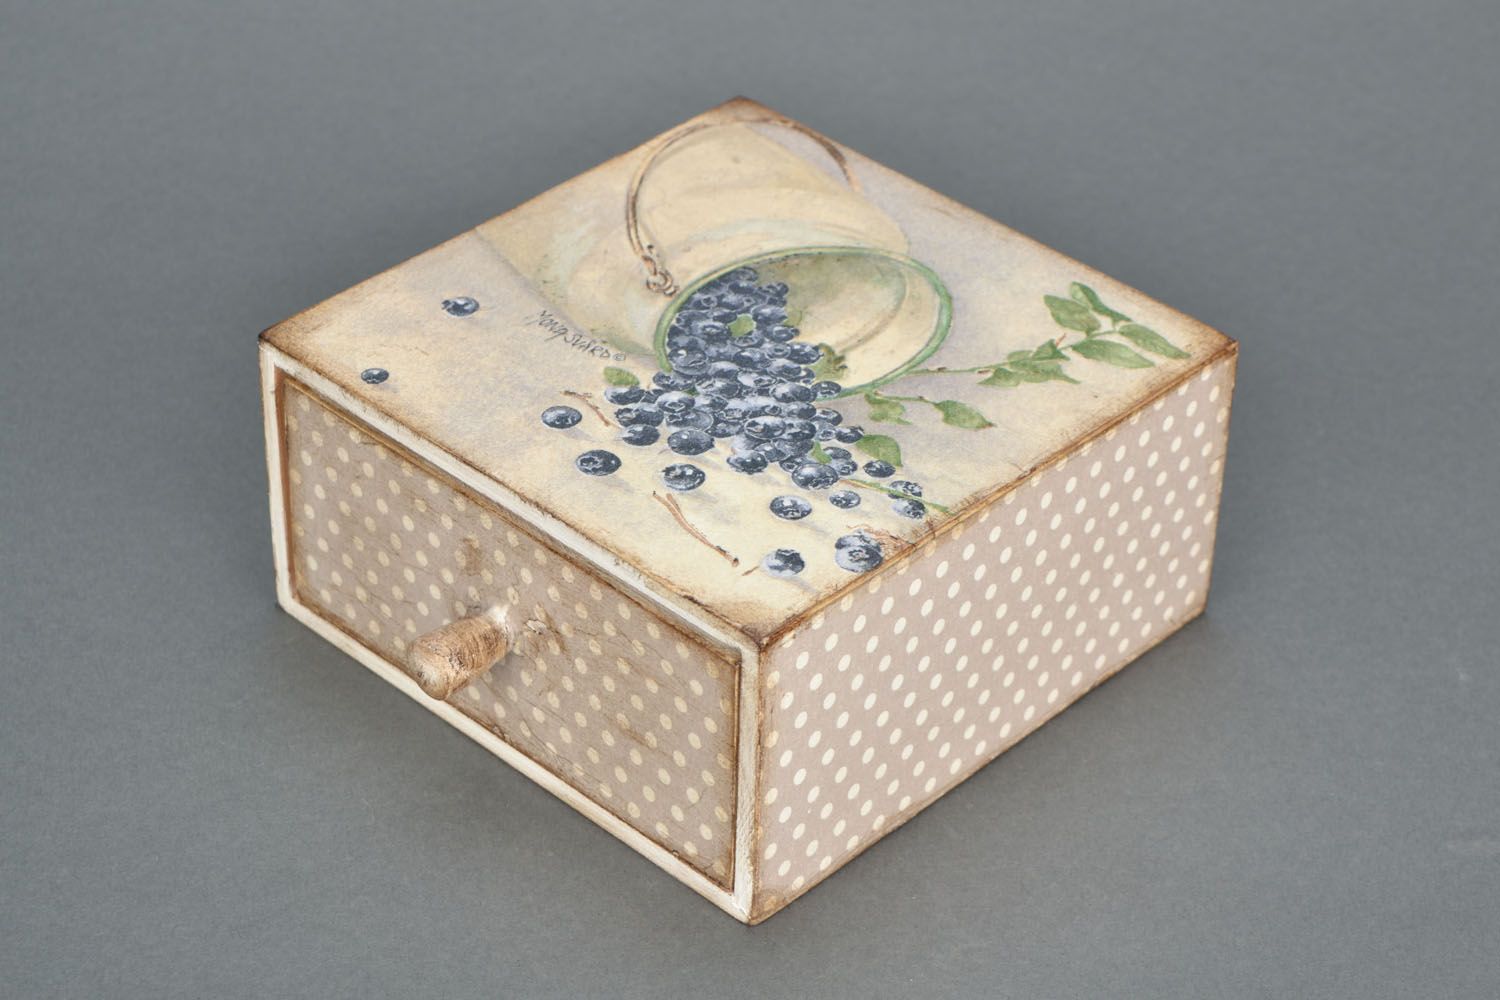 Blueberry decorative box photo 3